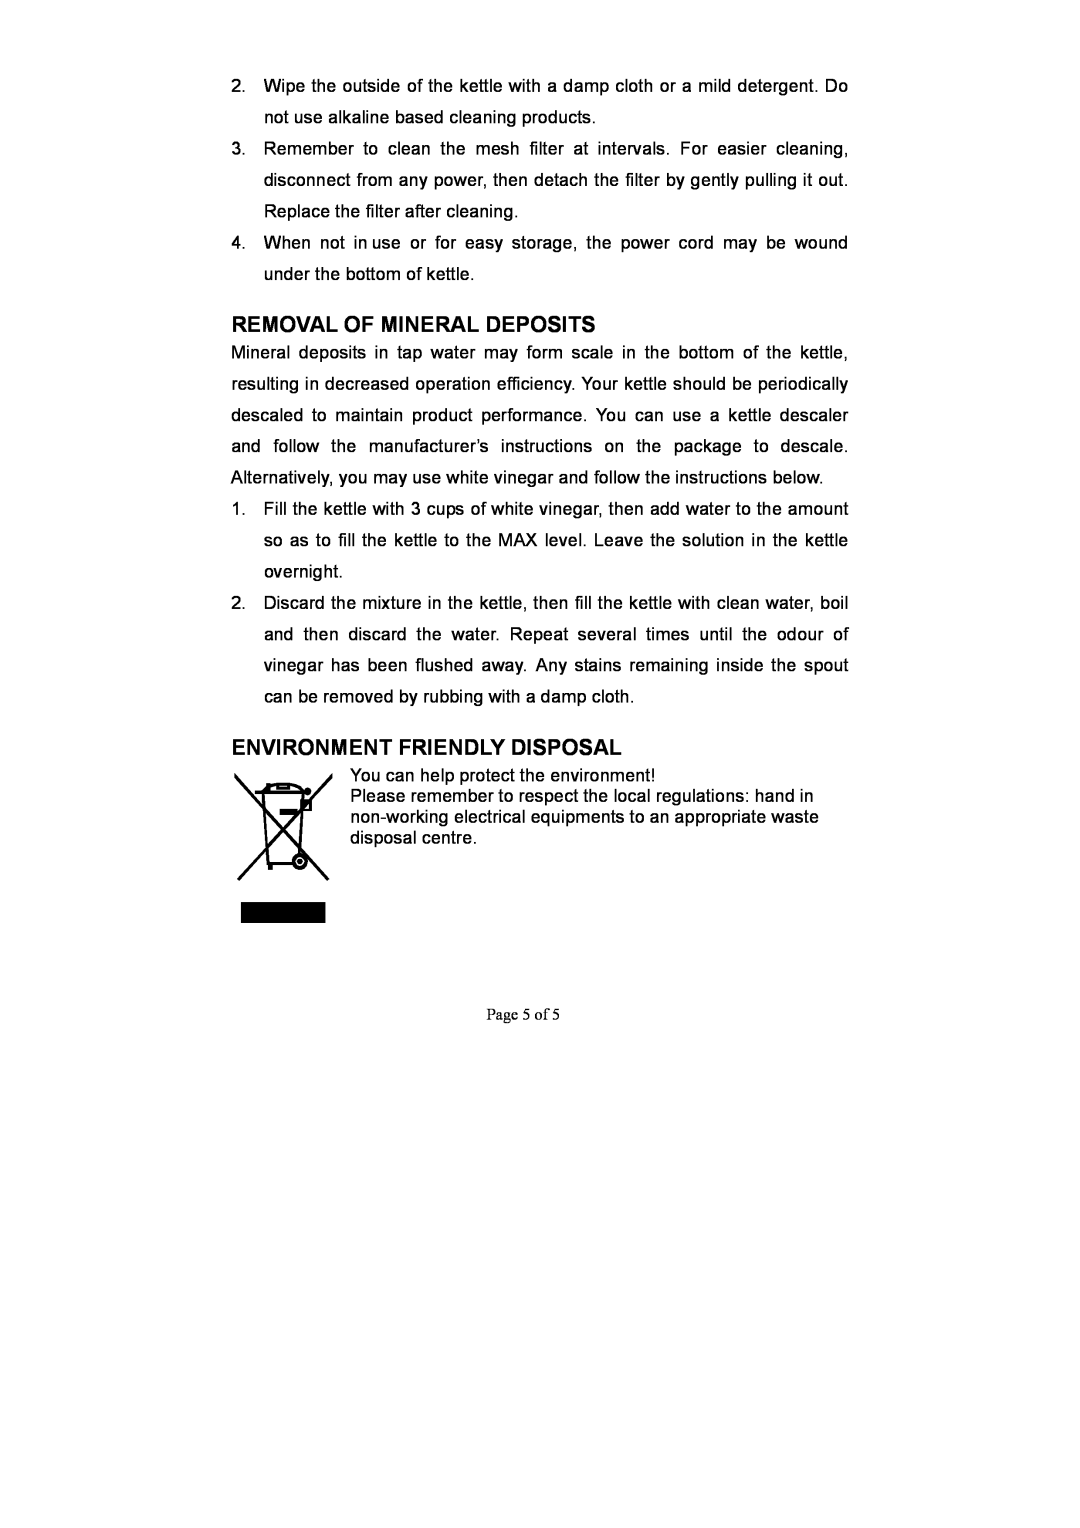 Sharp EKJ-17WH manual Removal Of Mineral Deposits, Environment Friendly Disposal 